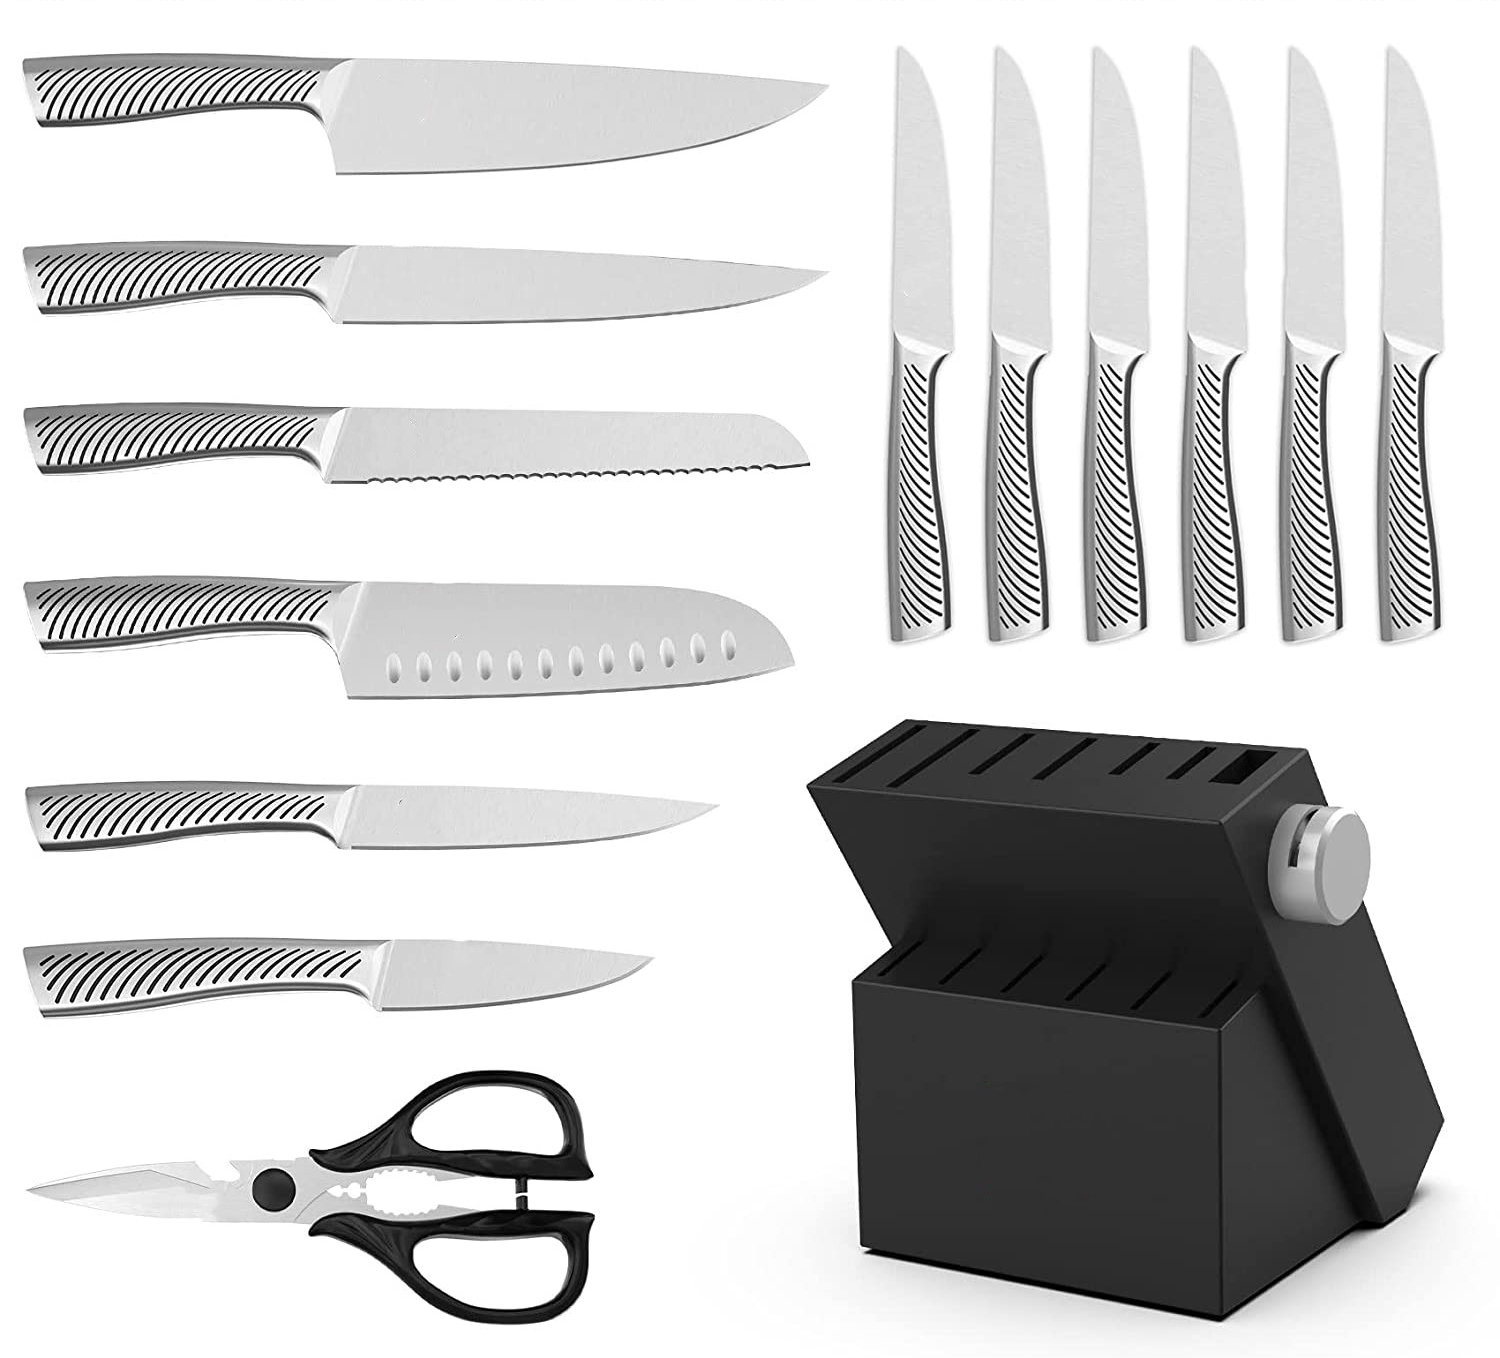 Professional Knife Sharpener - 14Candles